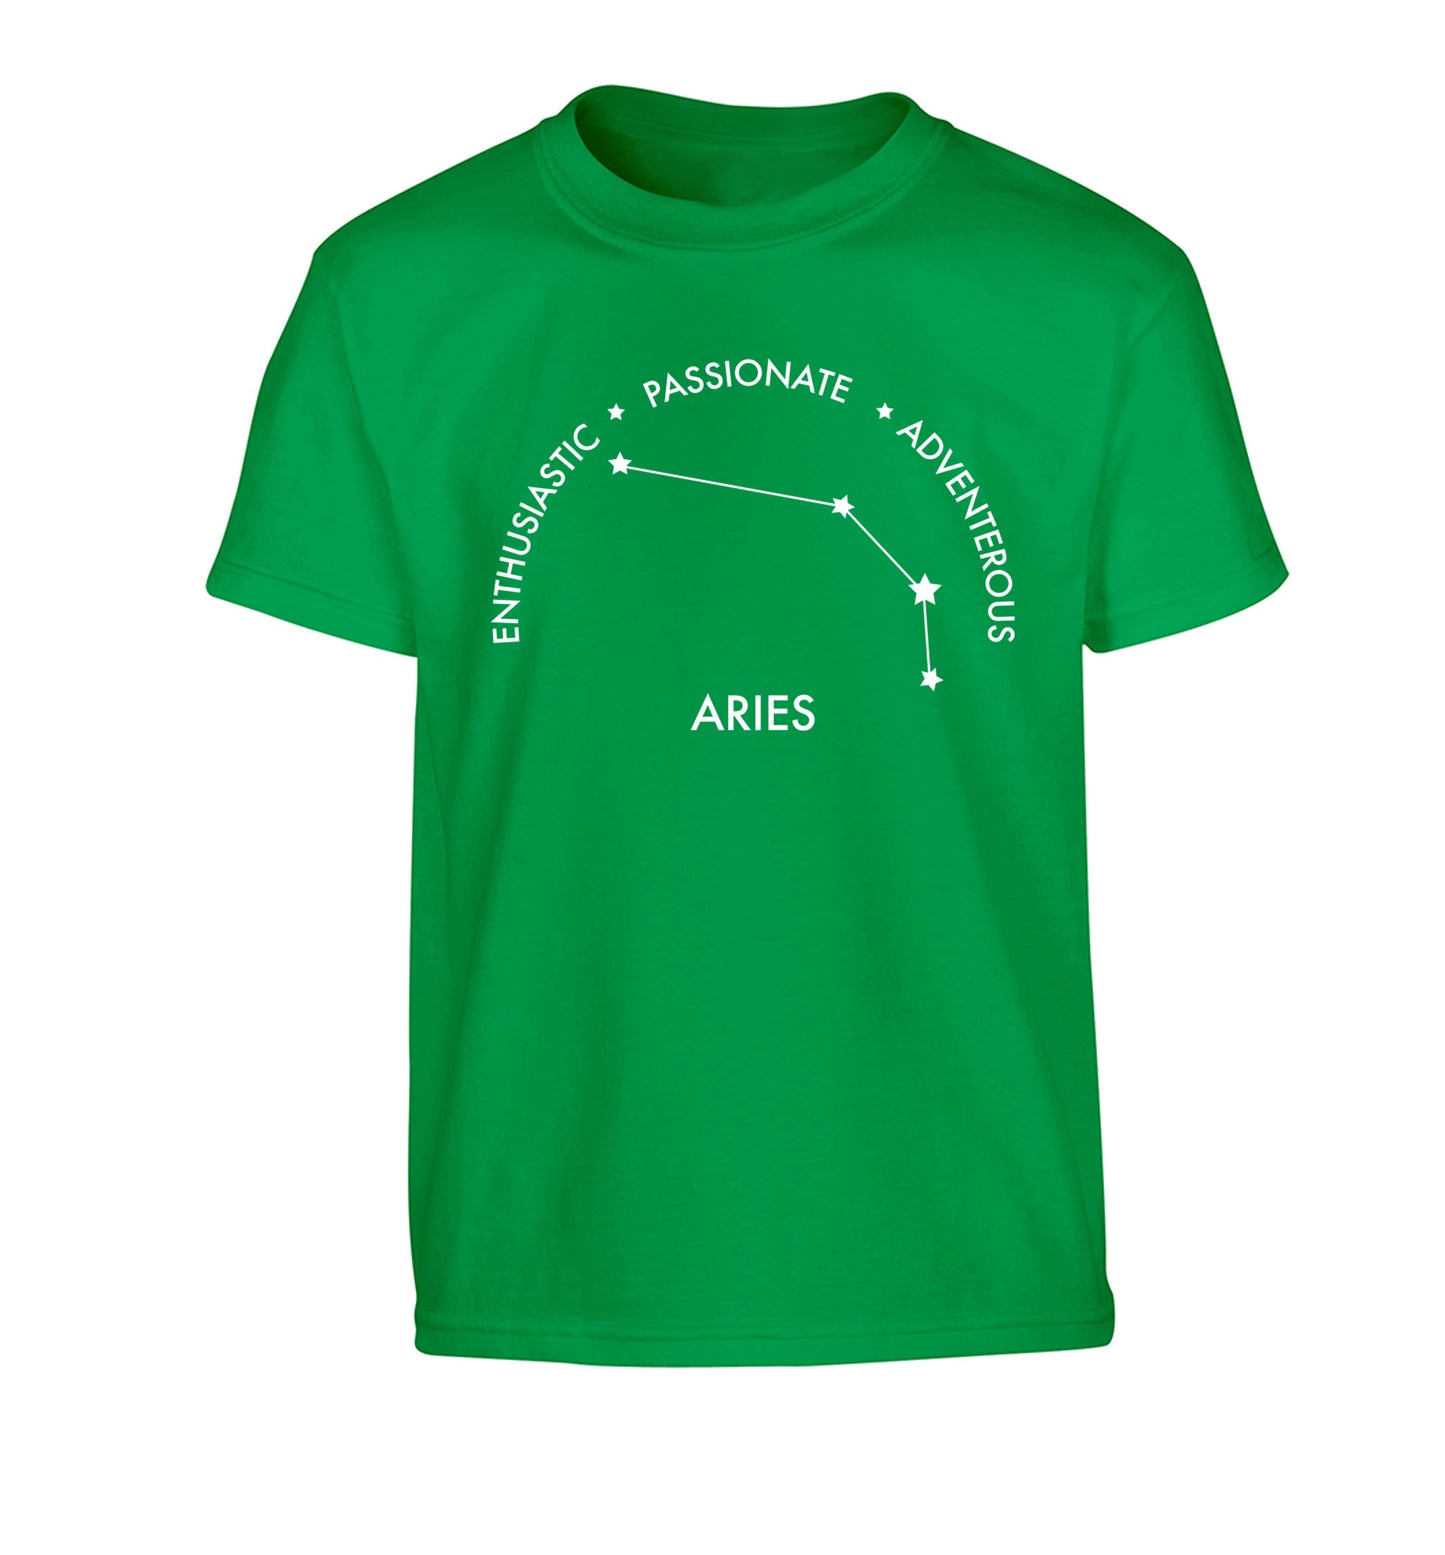 Aries enthusiastic | passionate | adventerous Children's green Tshirt 12-13 Years